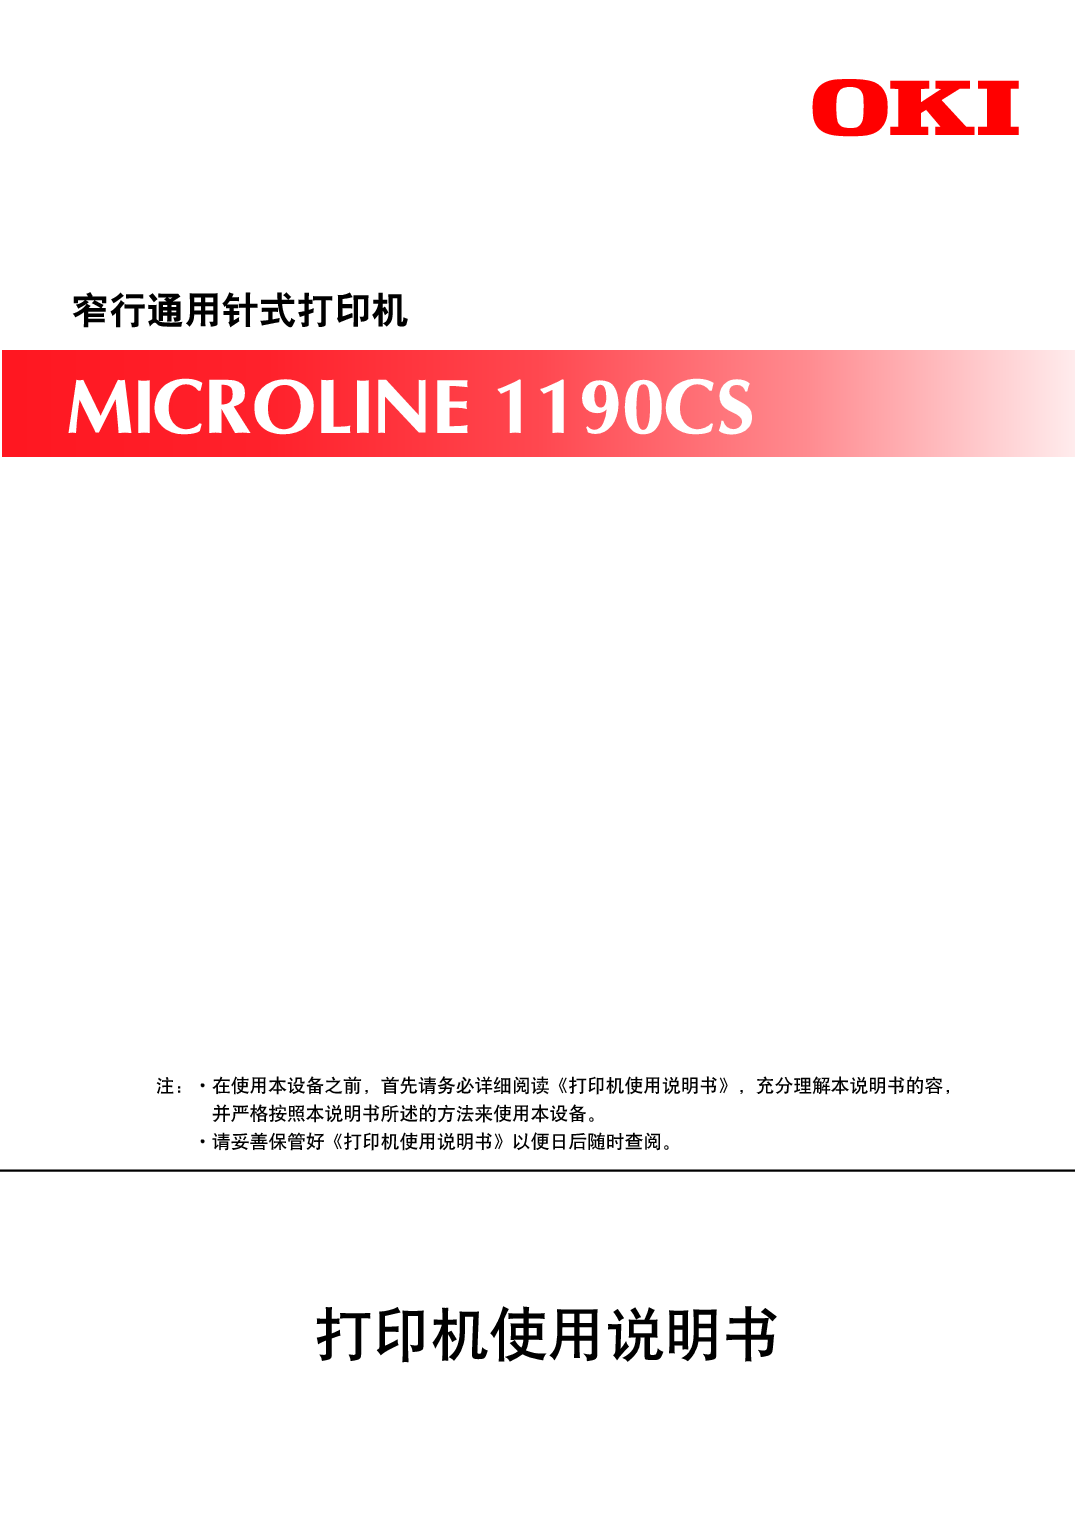 OKI Microline 1190CS 第10版 使用说明书 封面